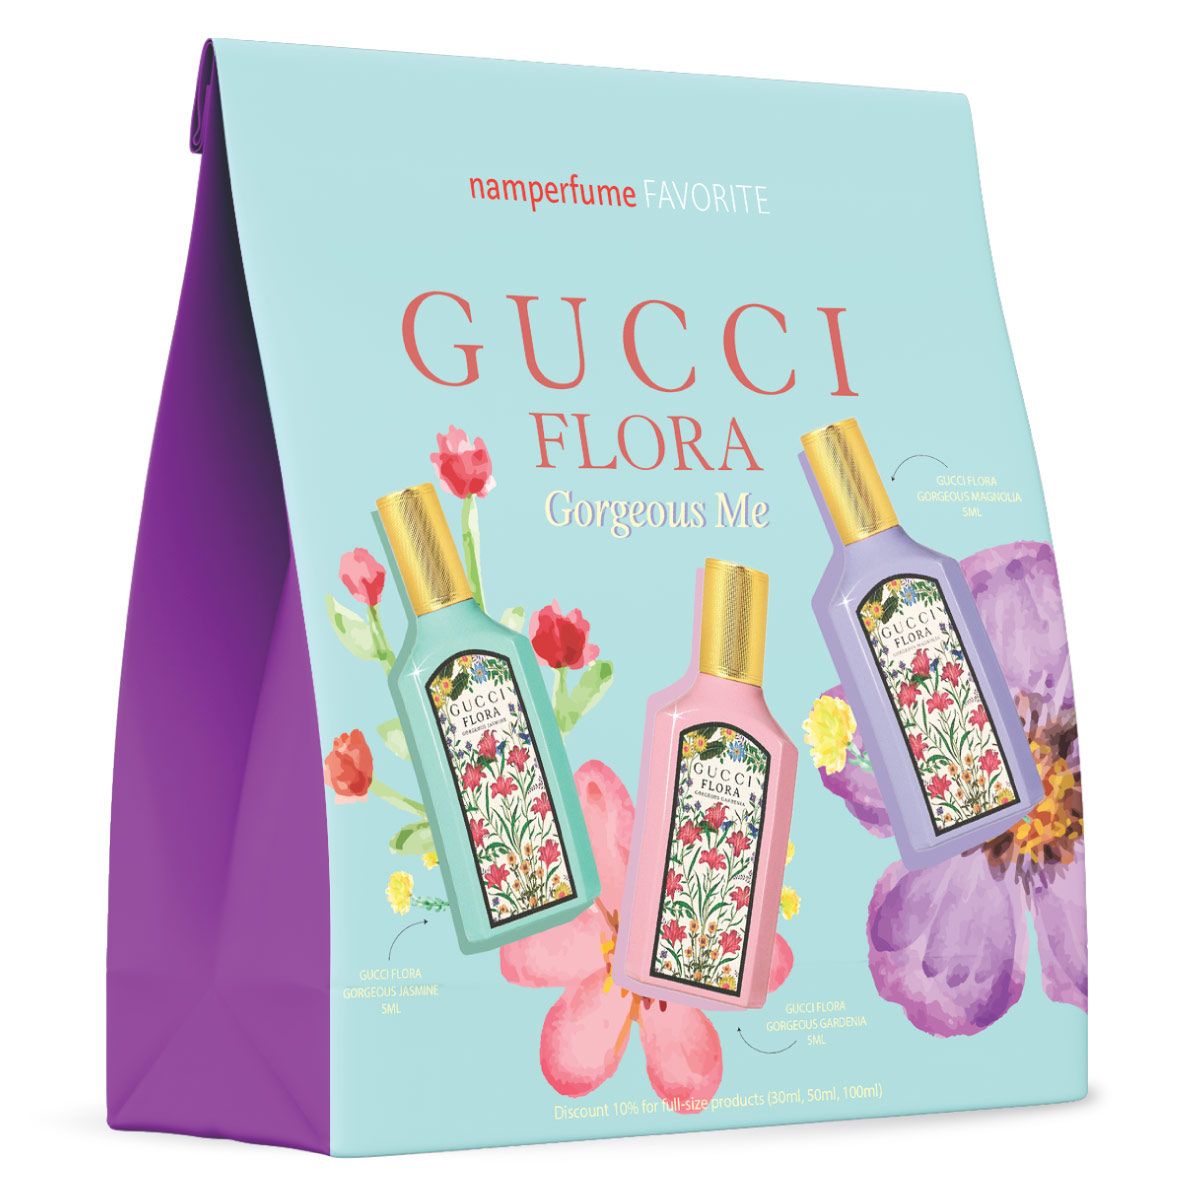  Gift Set Gucci Flora Gorgeous Me 